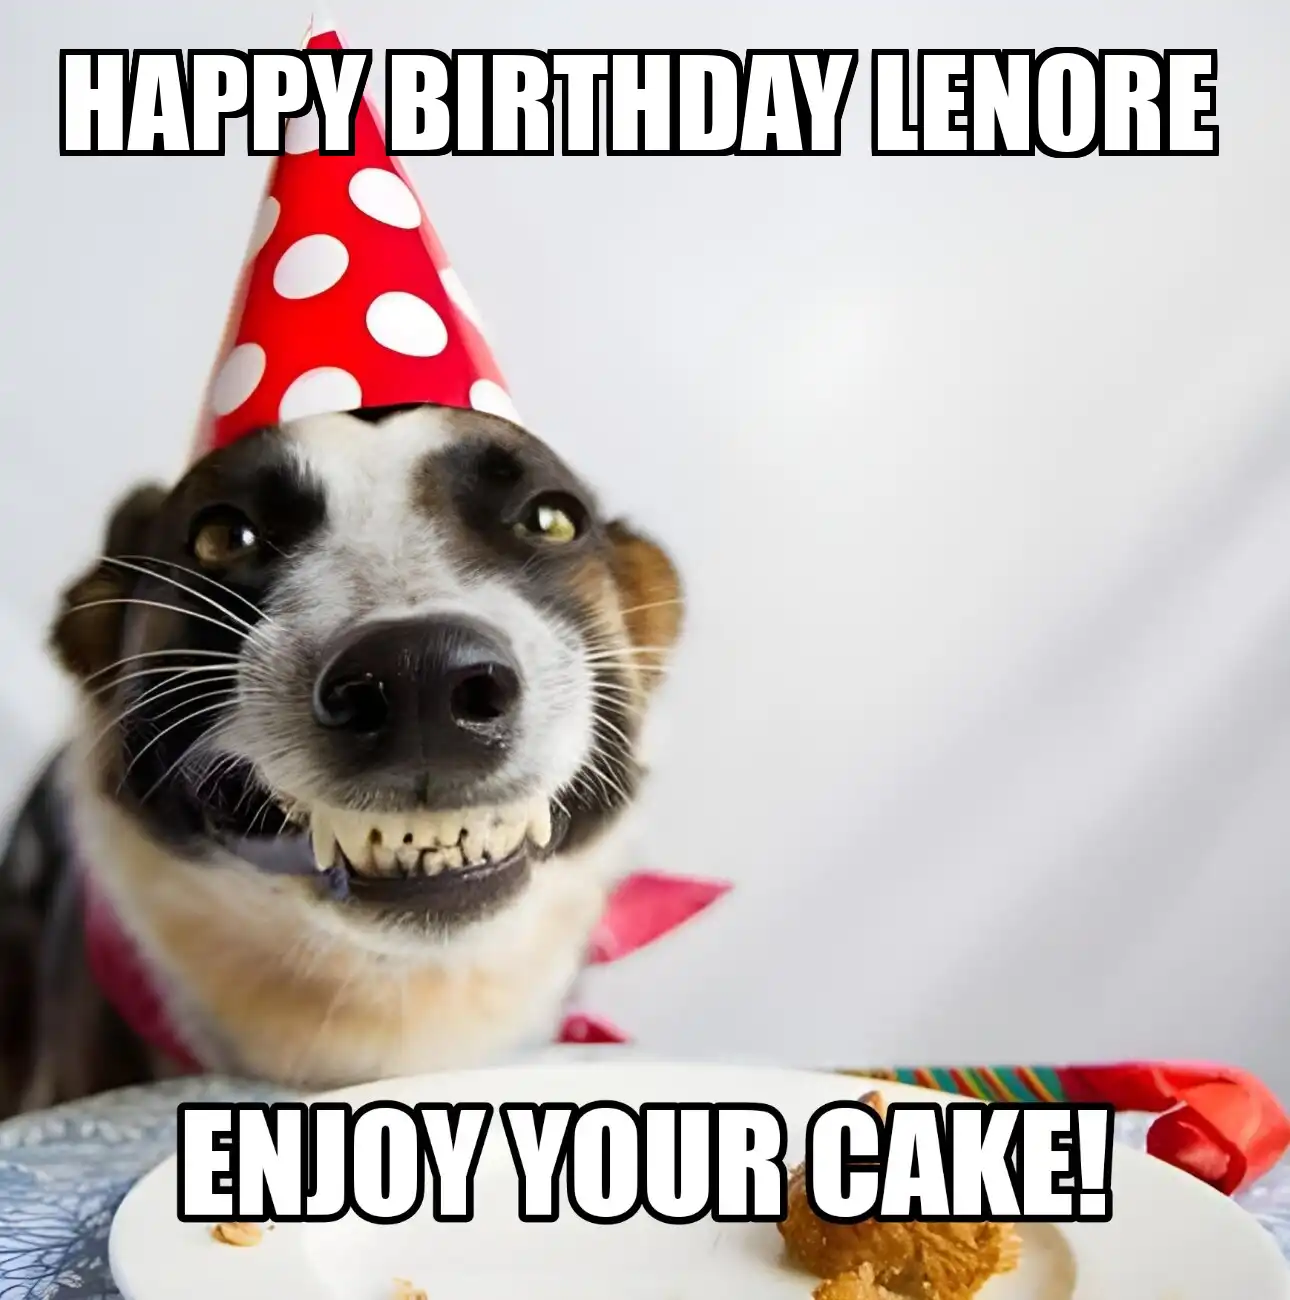 Happy Birthday Lenore Enjoy Your Cake Dog Meme